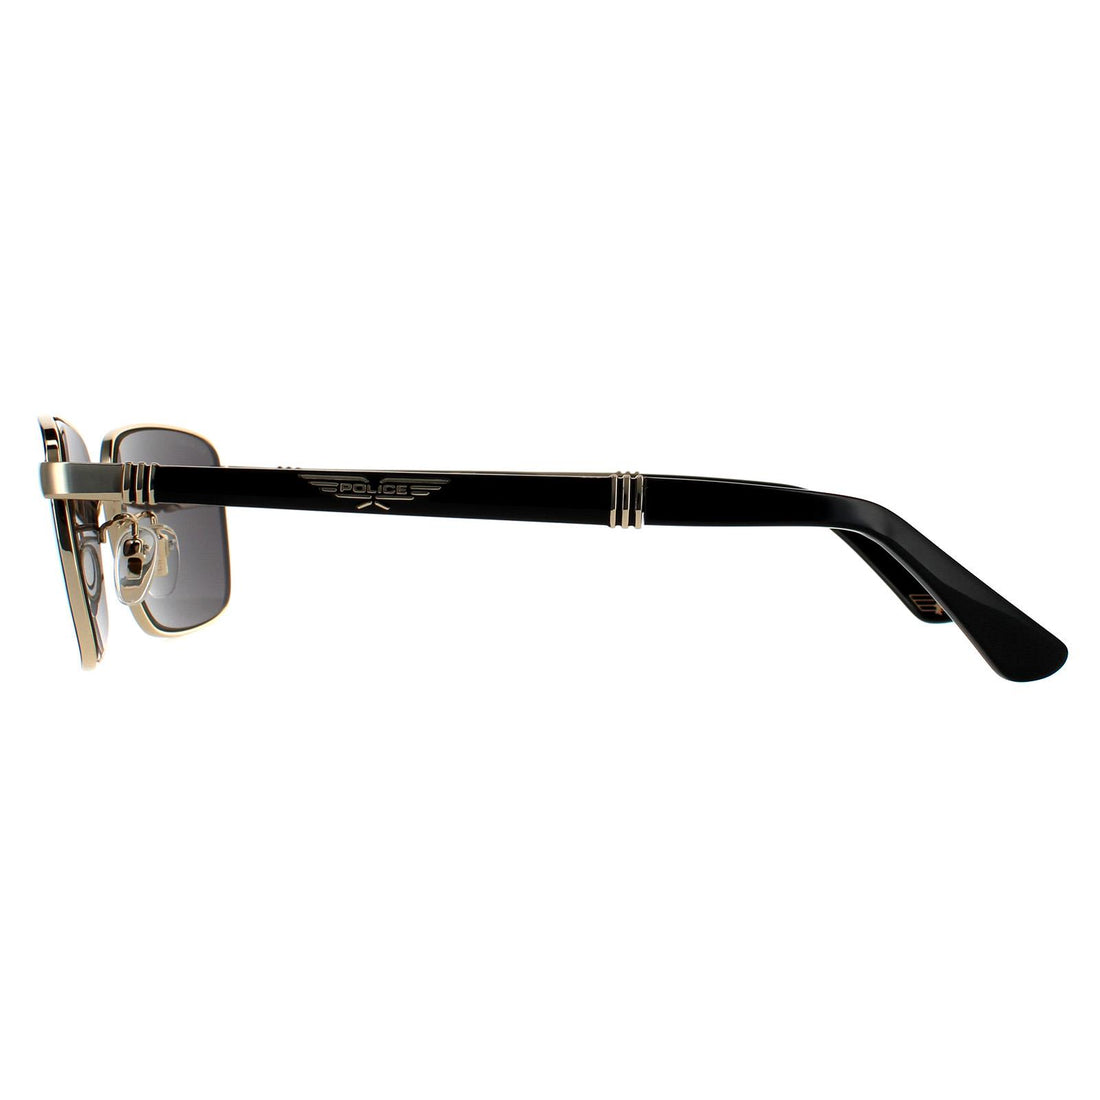 Police Sunglasses SPLA54 Origins 28 301P Rose Gold Black Grey Polarized